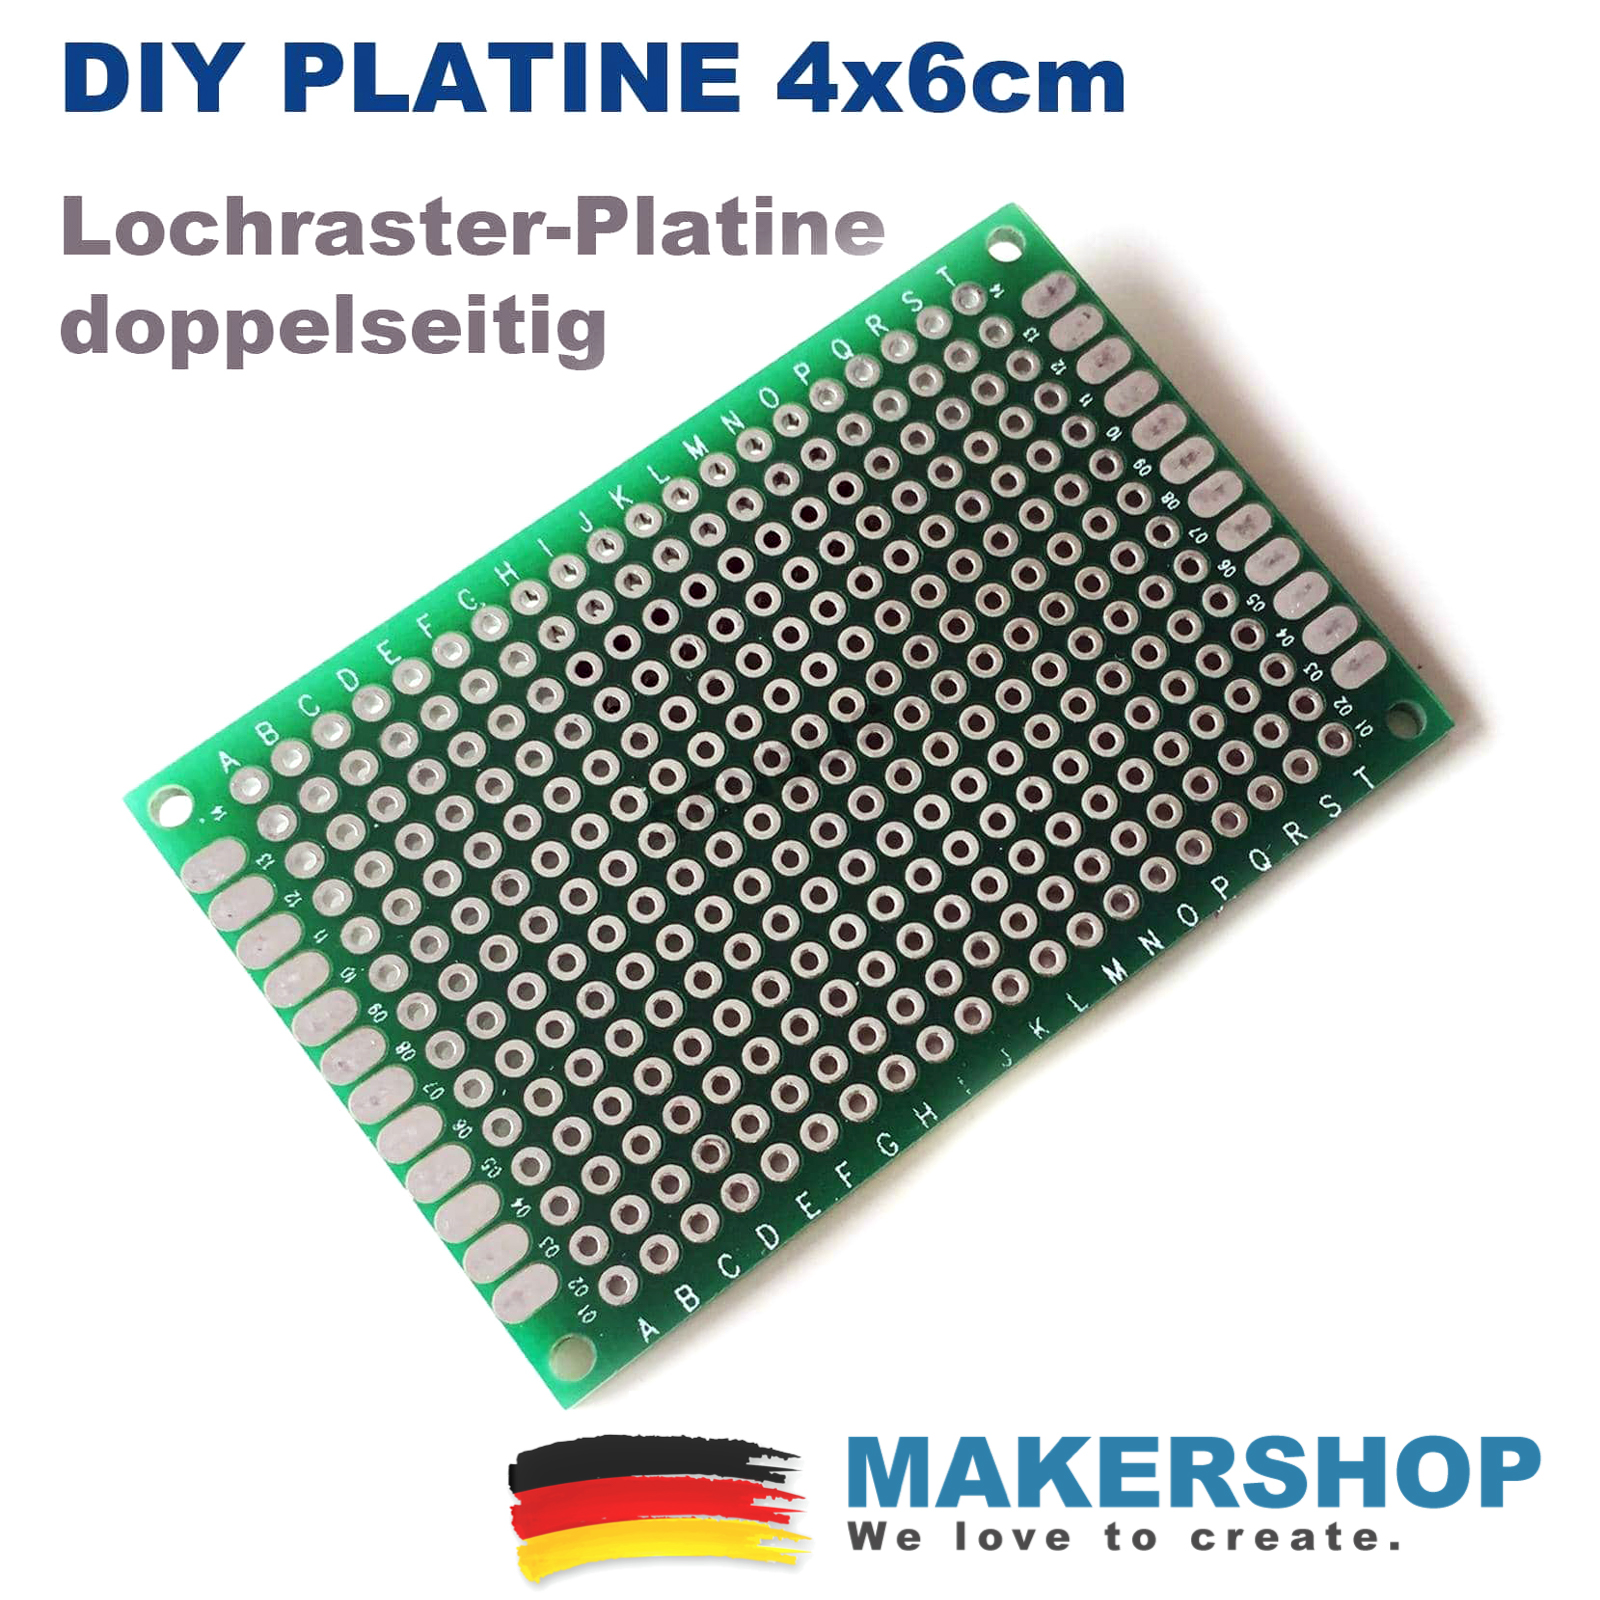 DIY Lochraster Platine doppelseitig 4 x 6cm Arduino Raspberry Pi Prototype  –